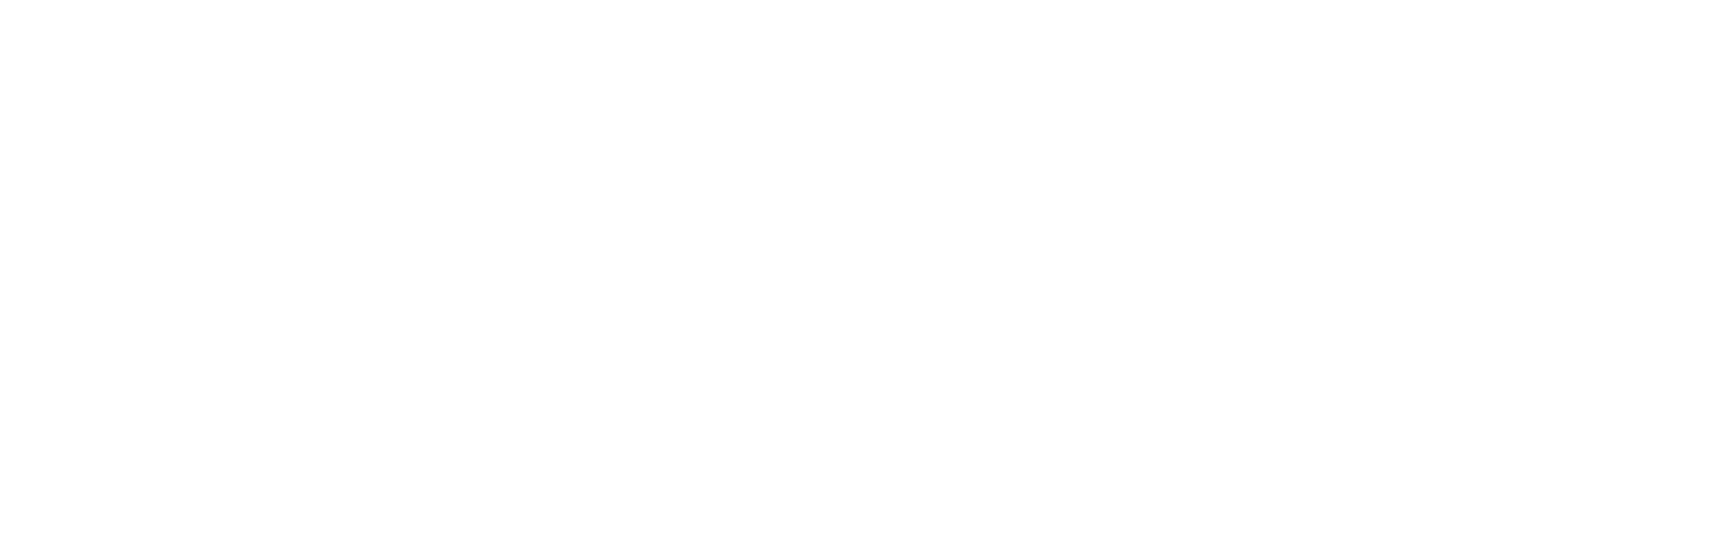 Tallis For Longmont City Council At Large